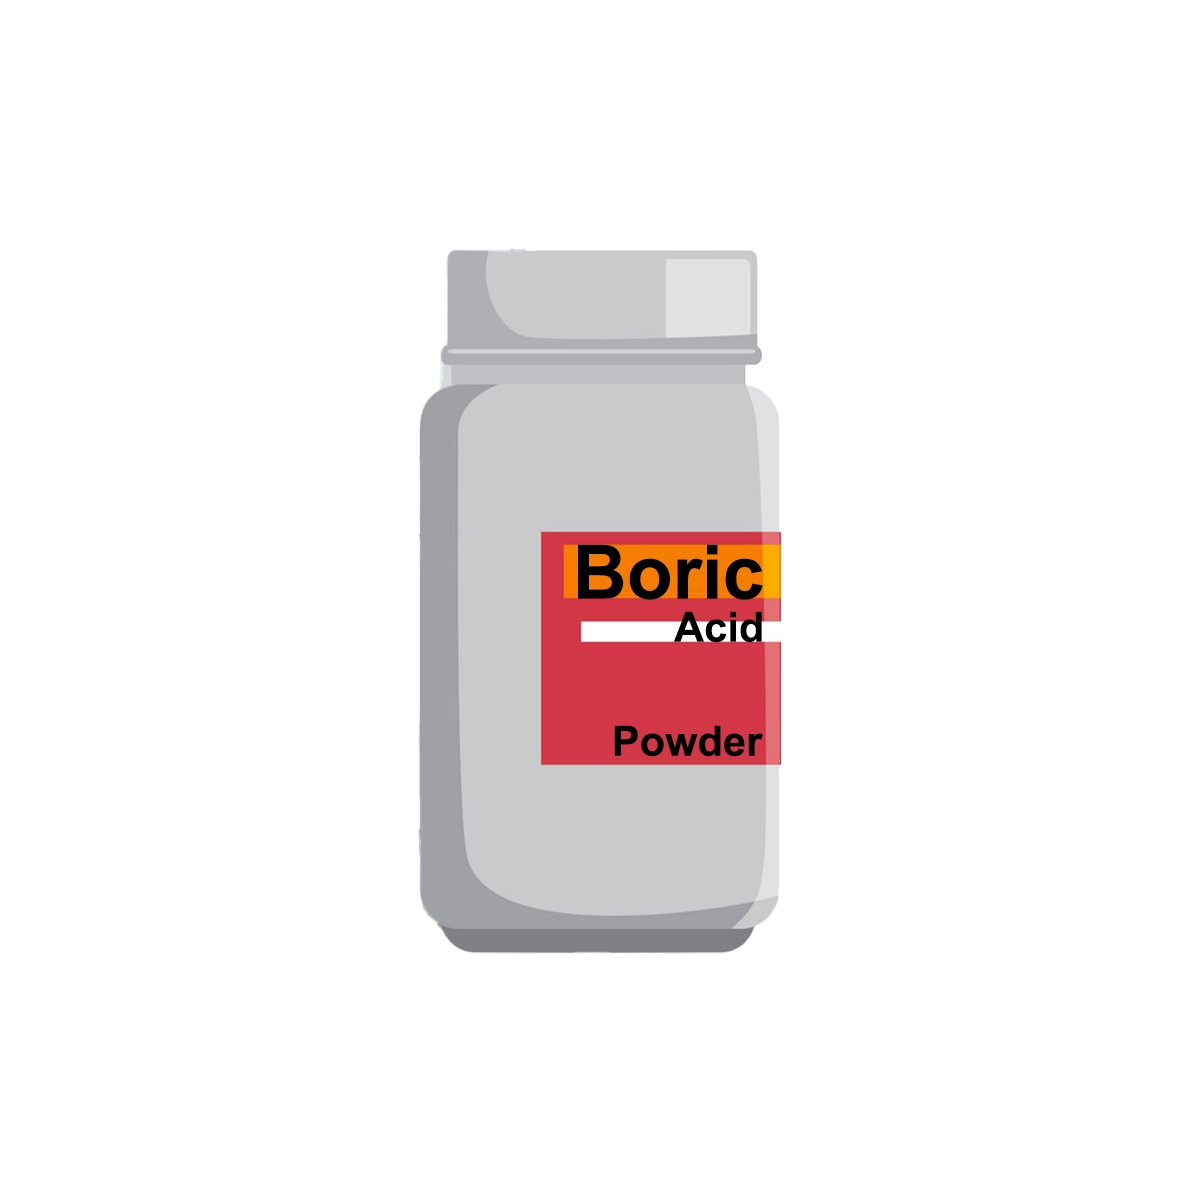 First product image of Boric Acid Powder 15g